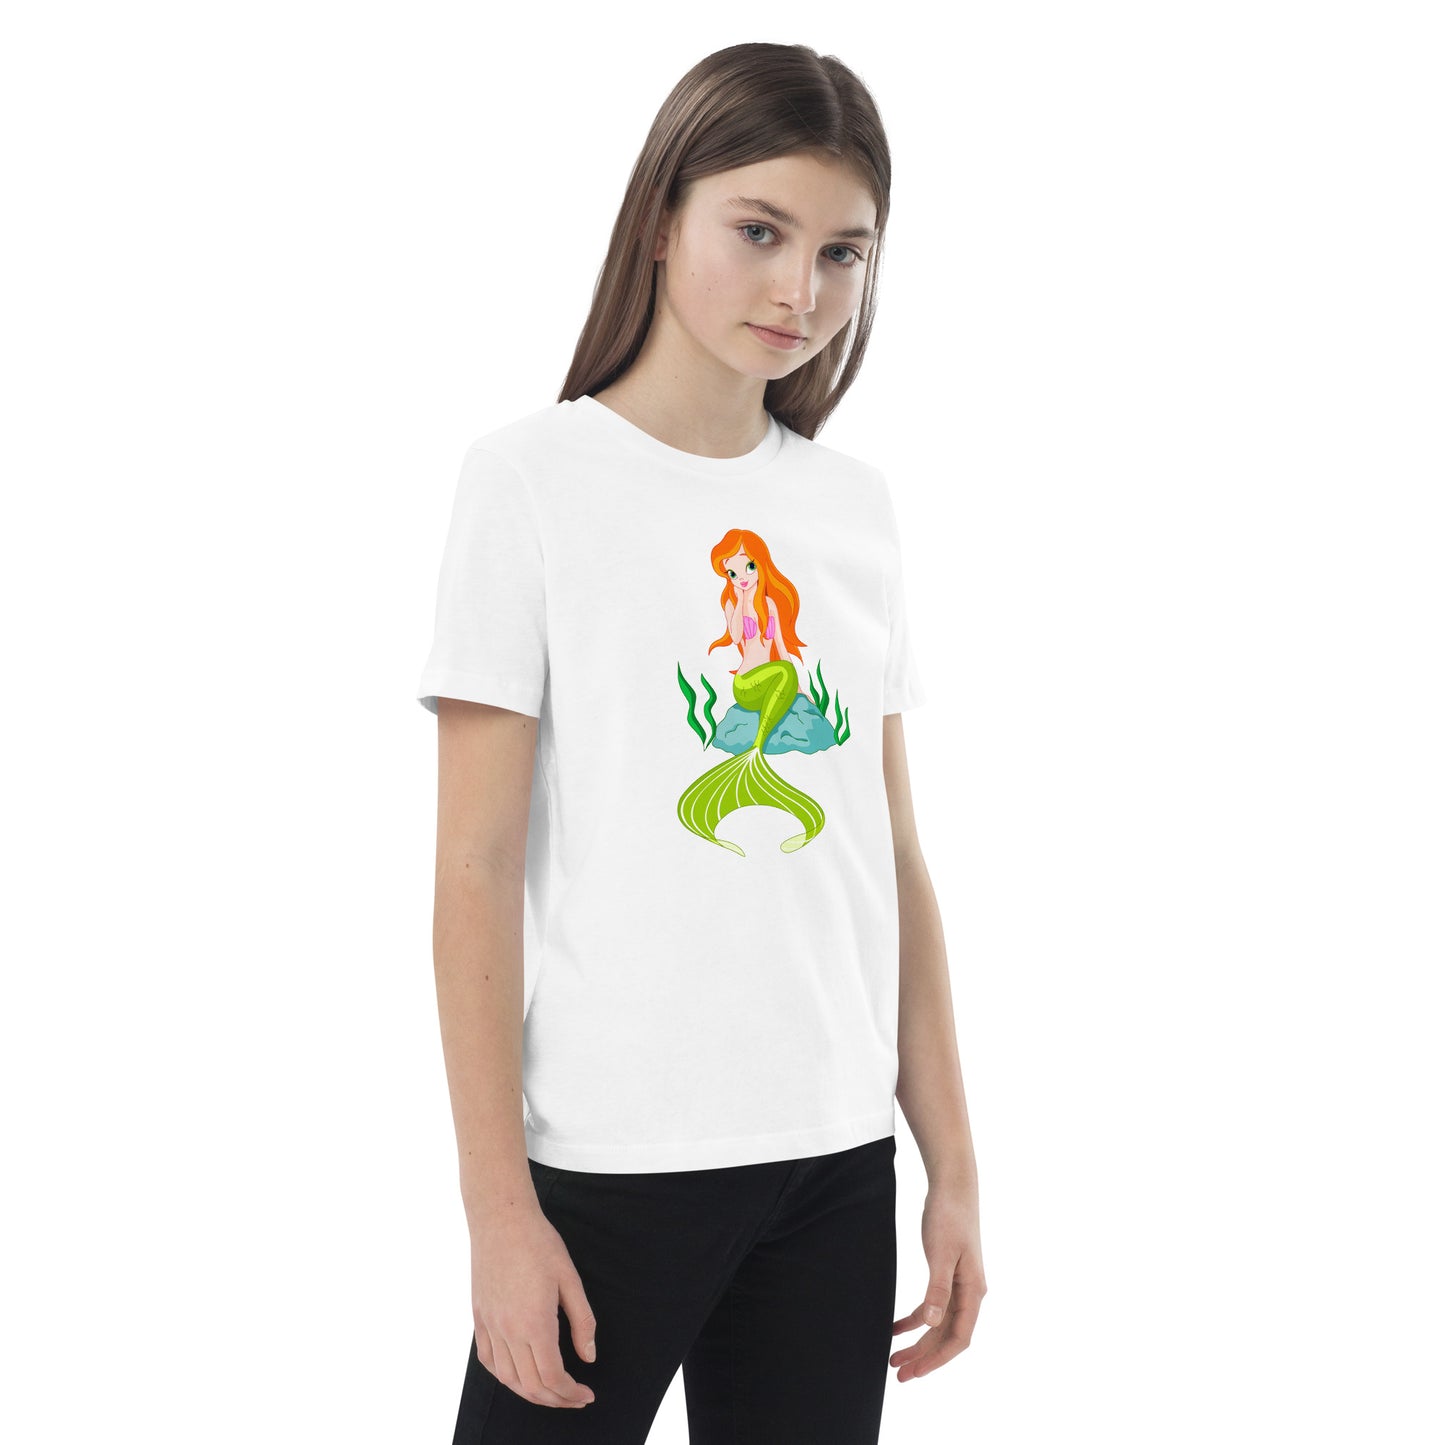 Mermaid kids t-shirt